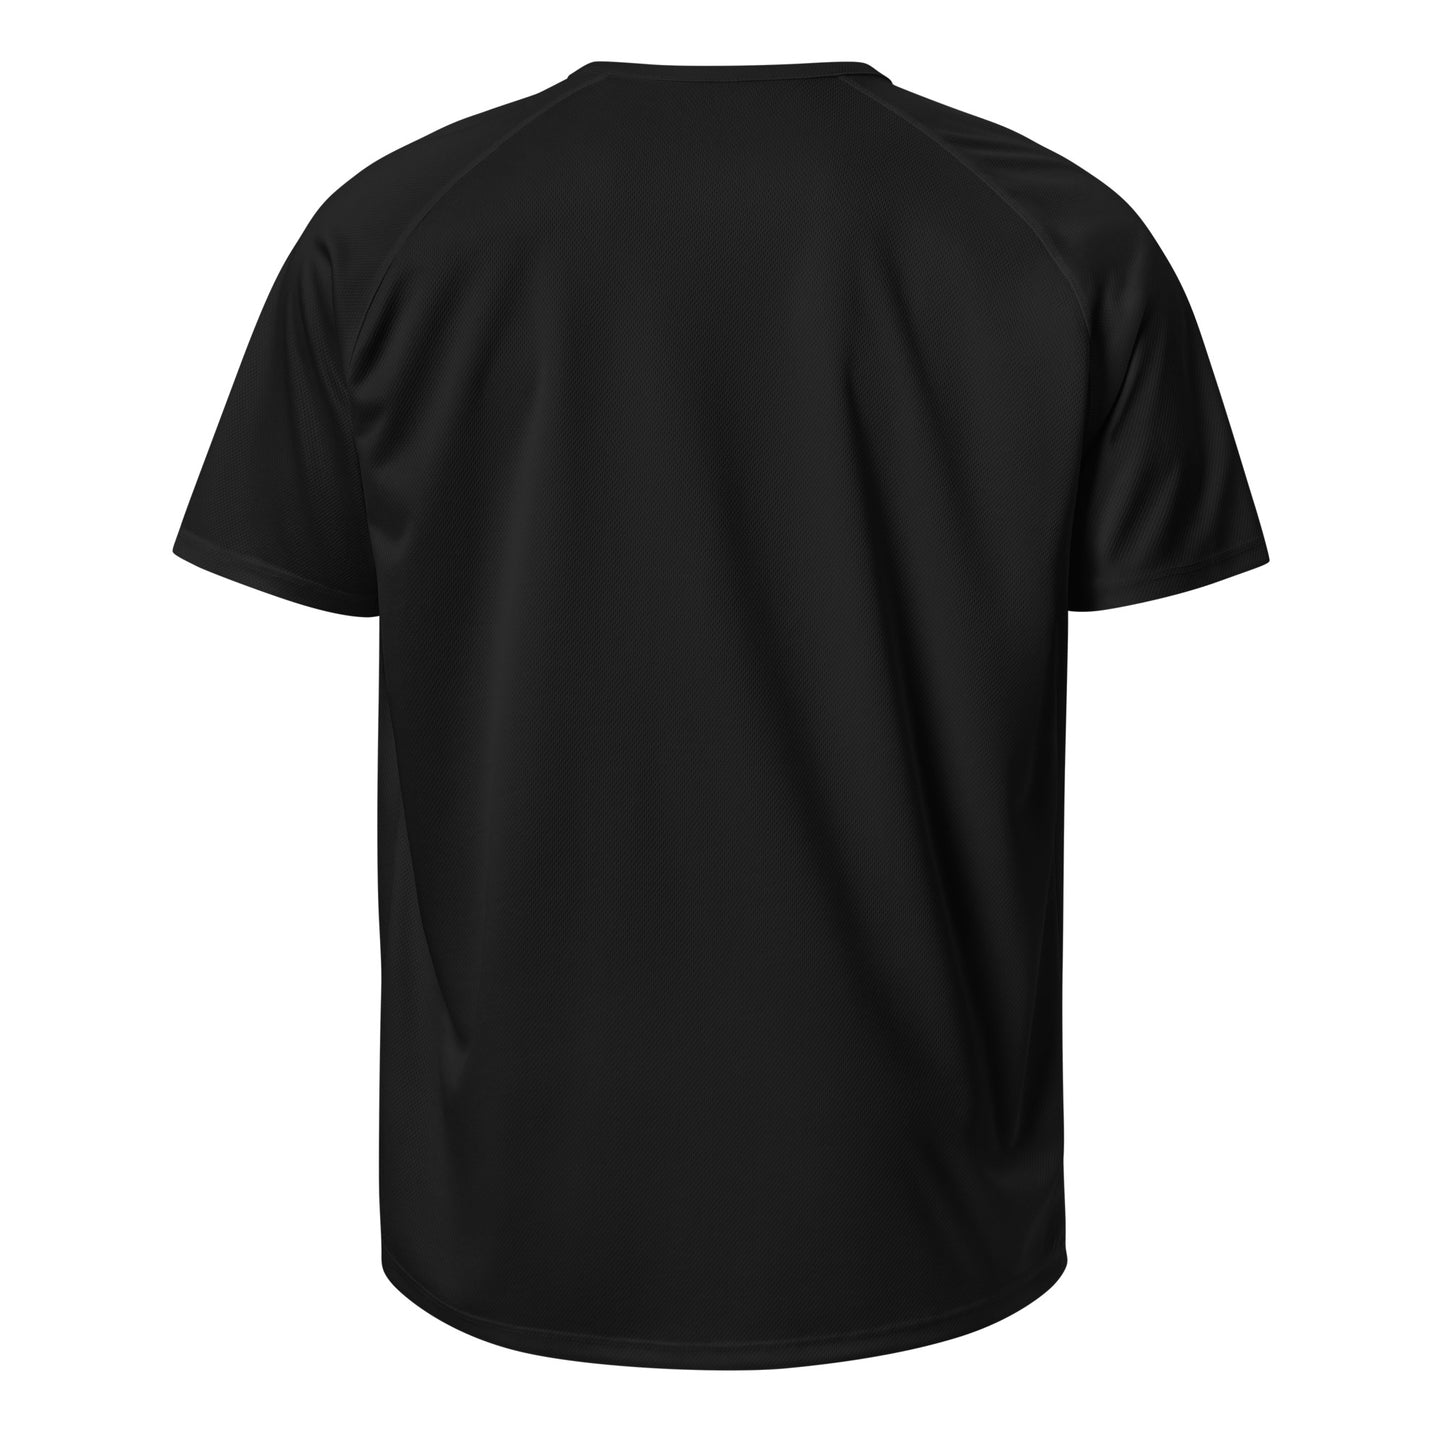 M106 - T-shirt/Sports/Breathable Fabric (Pony : Black)